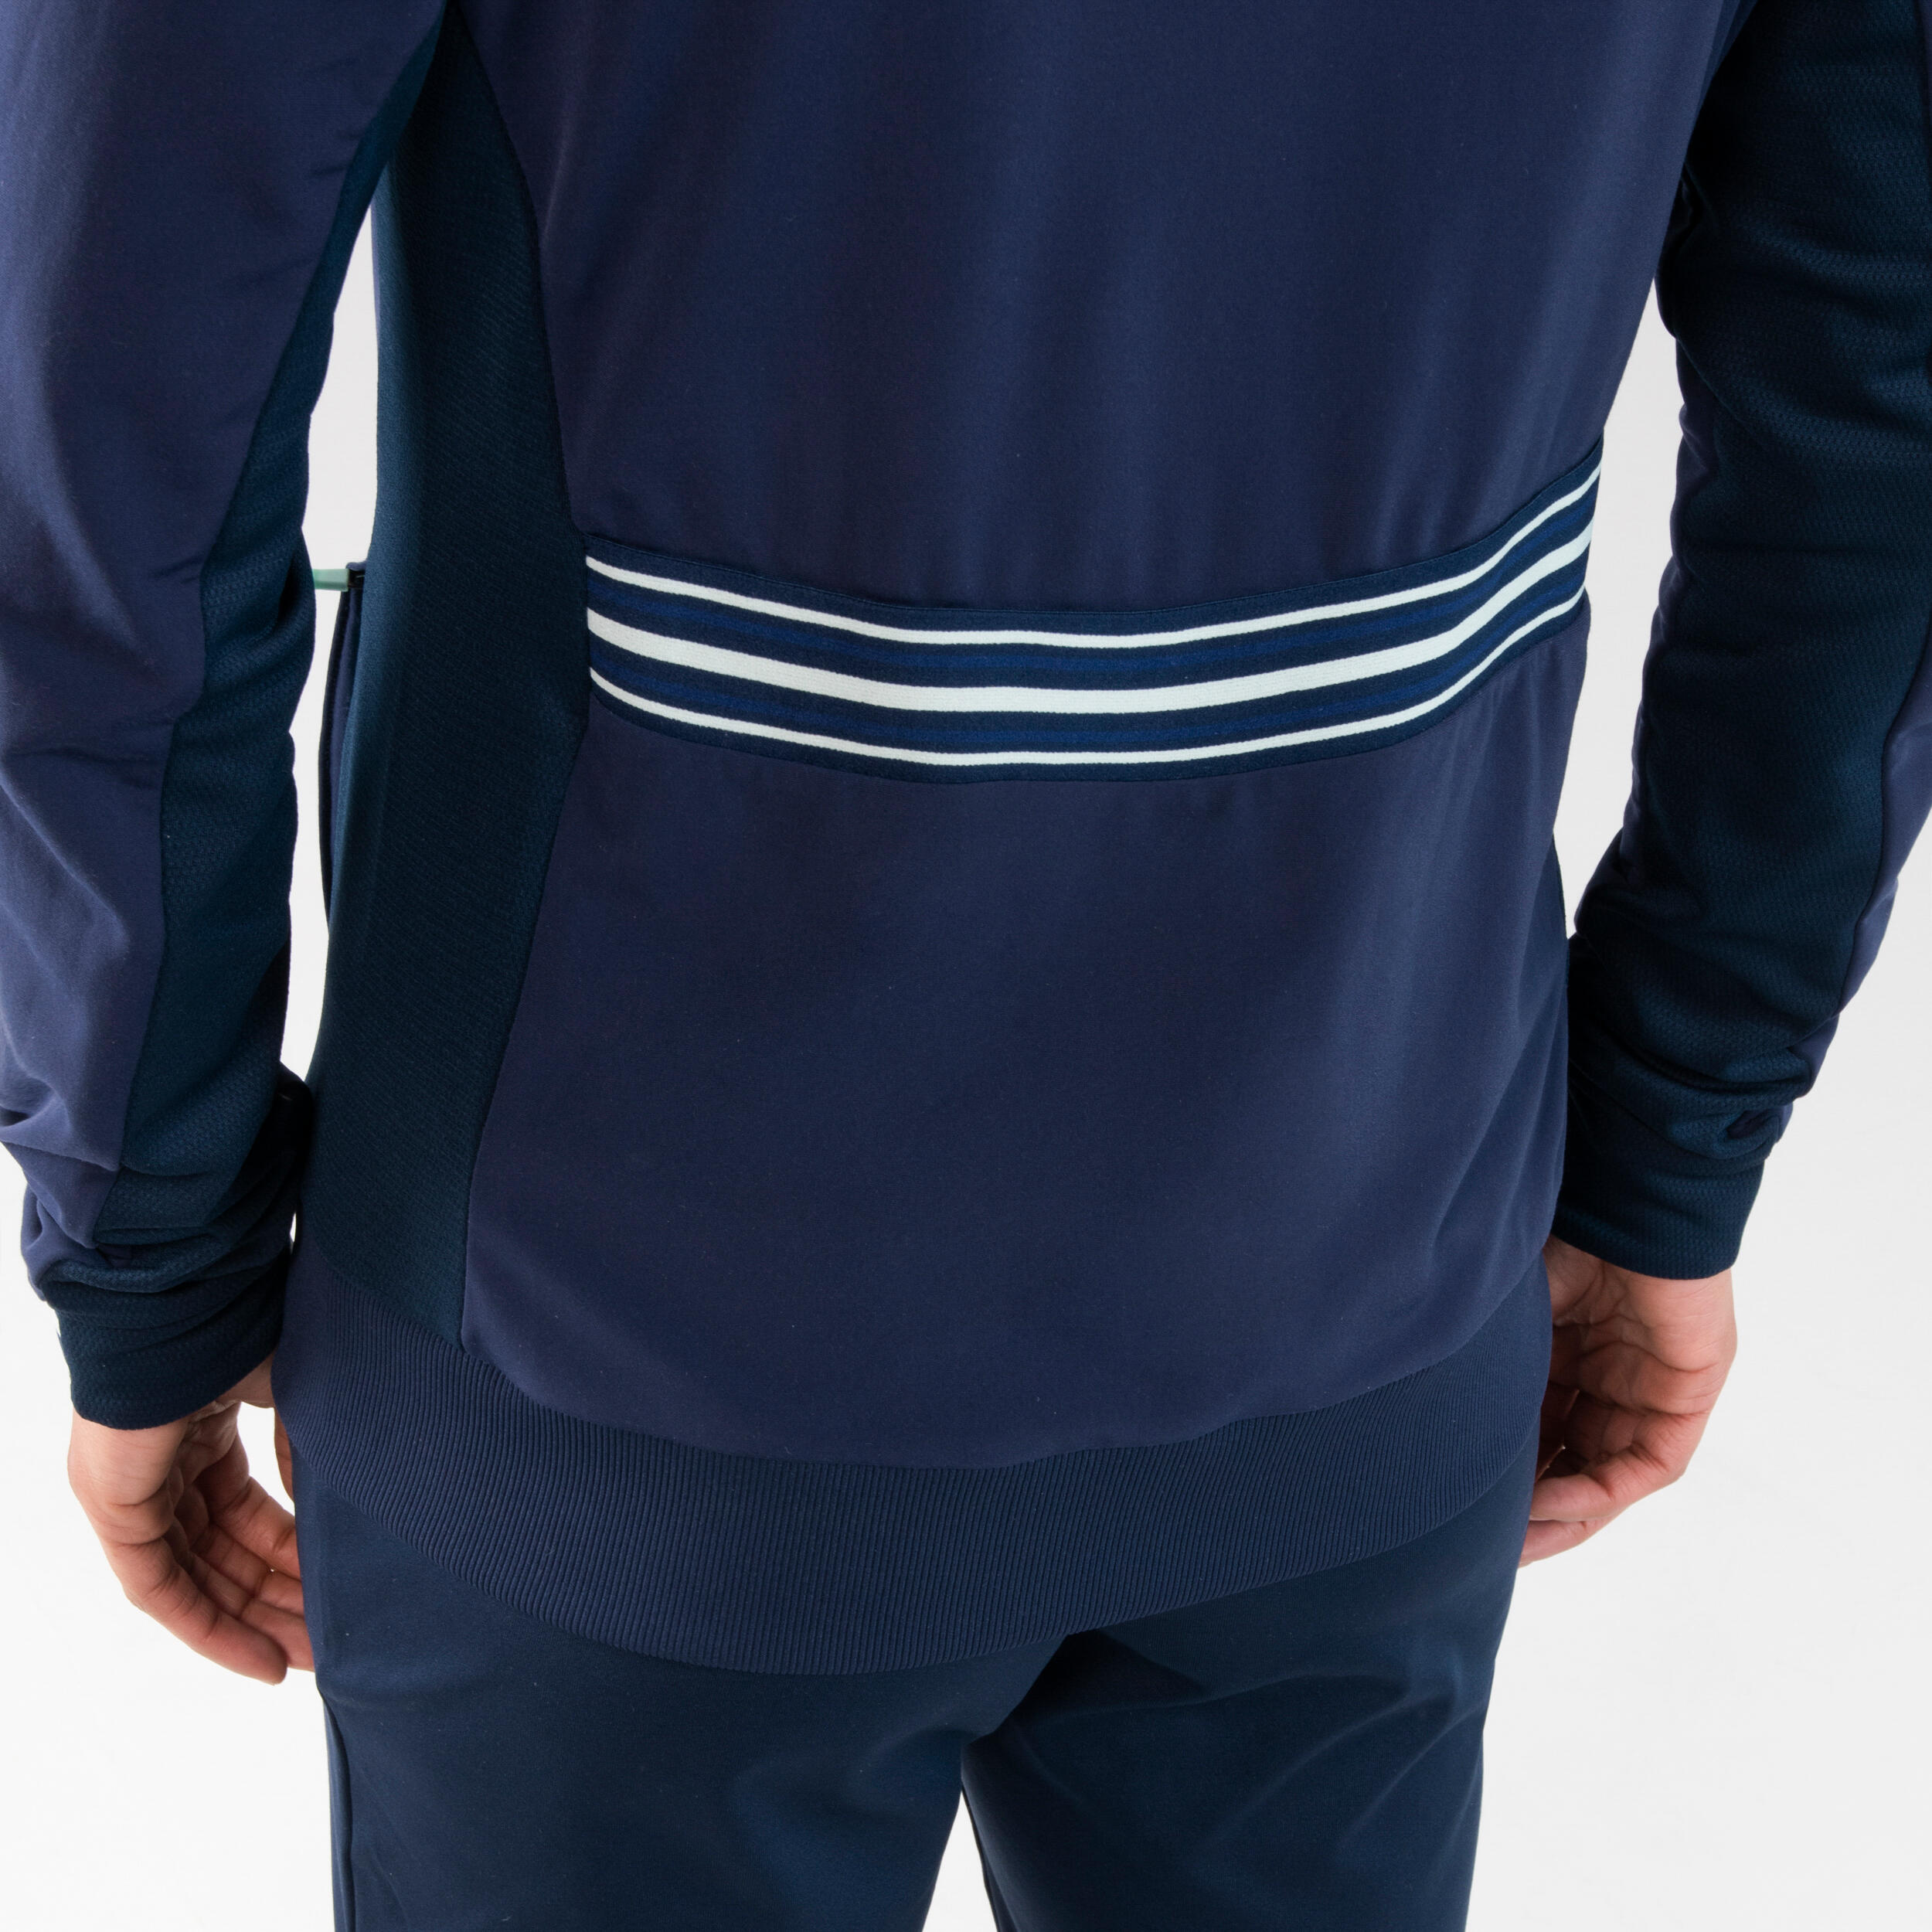 Warm Women's Athletics Jacket - Navy Blue / Light Blue 11/13